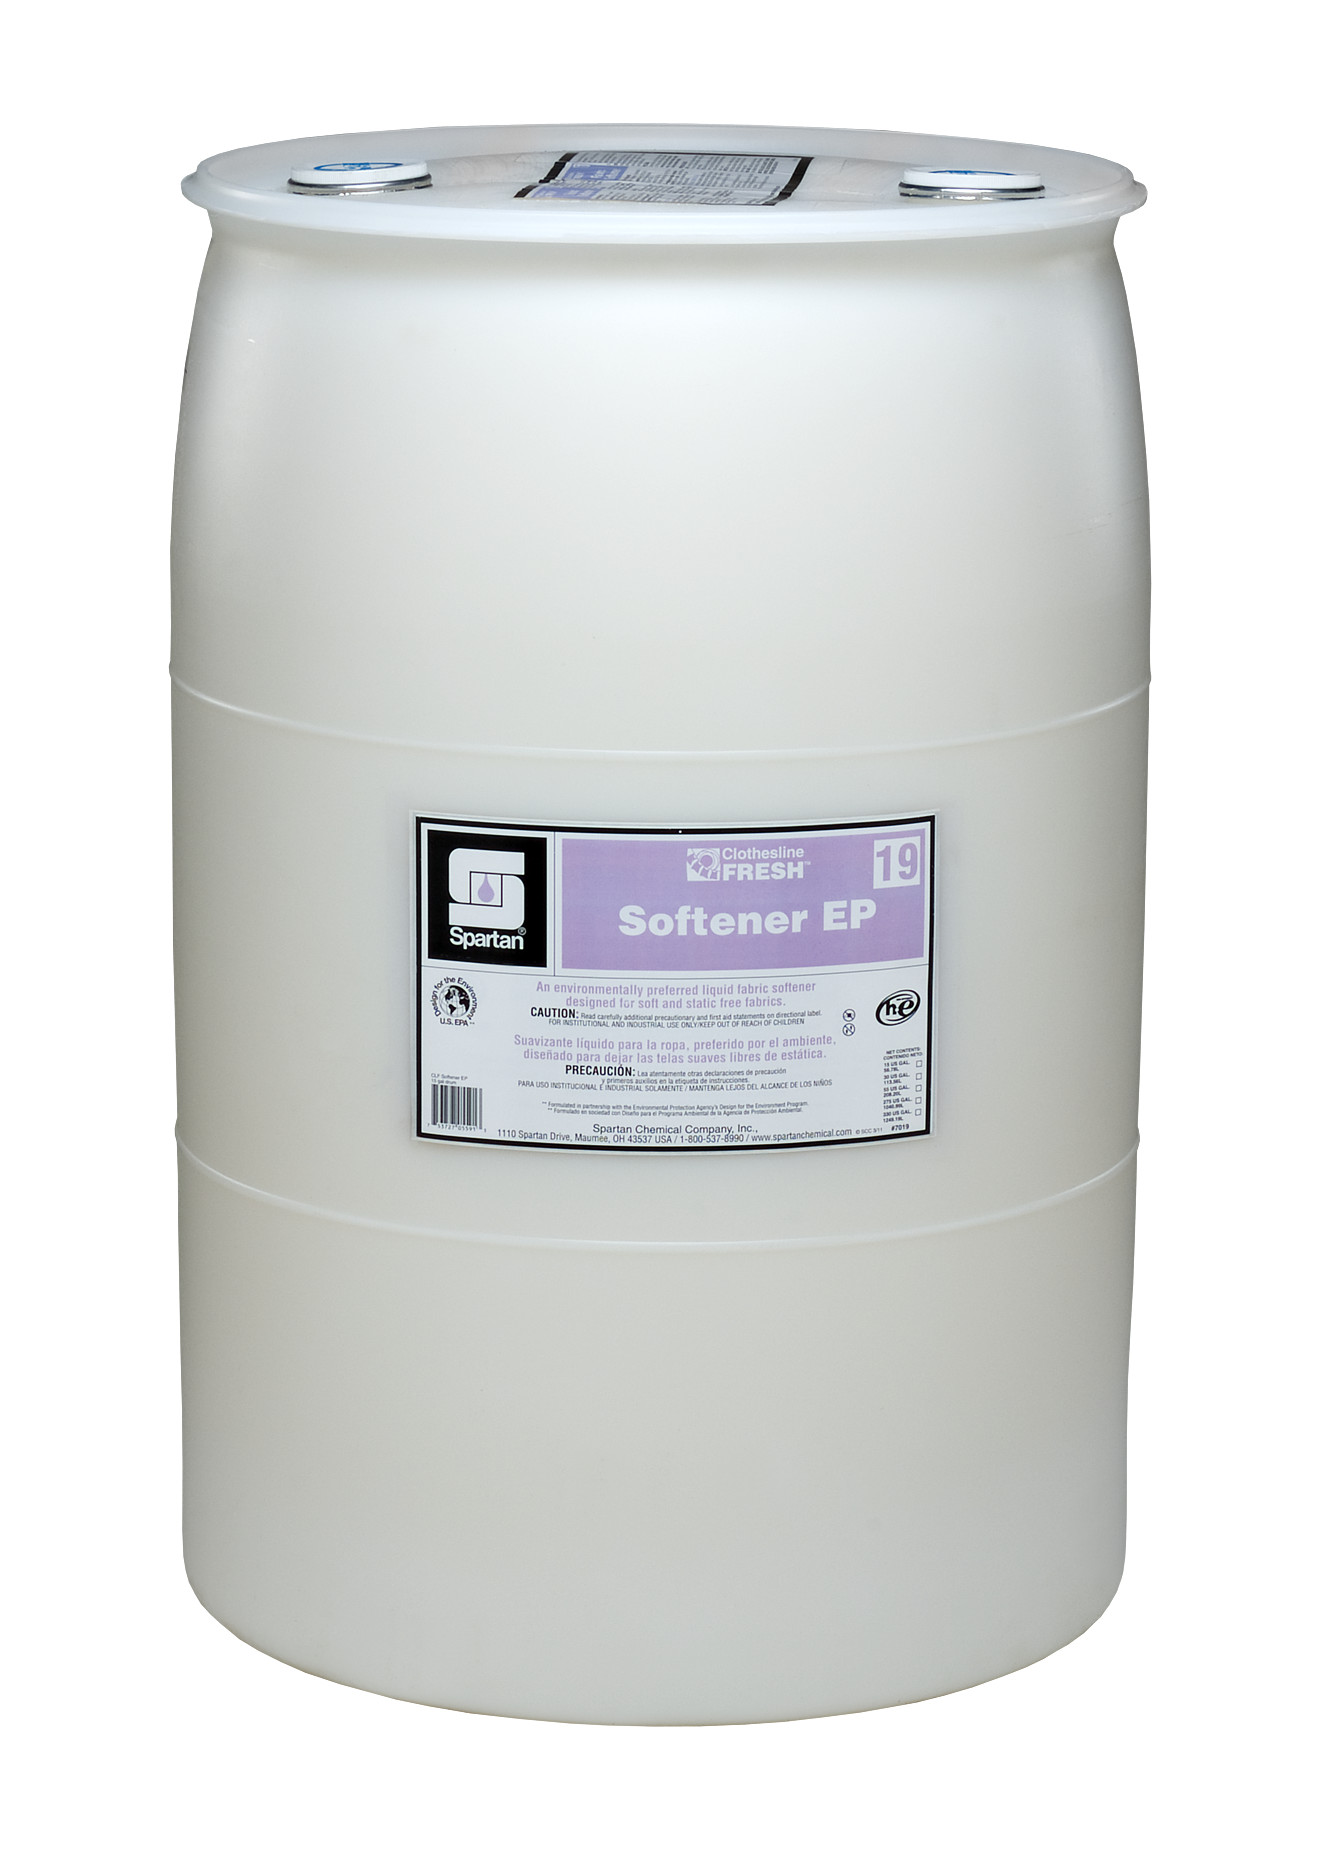 Spartan Chemical Company Clothesline Fresh Softener EP 19, 55 GAL DRUM